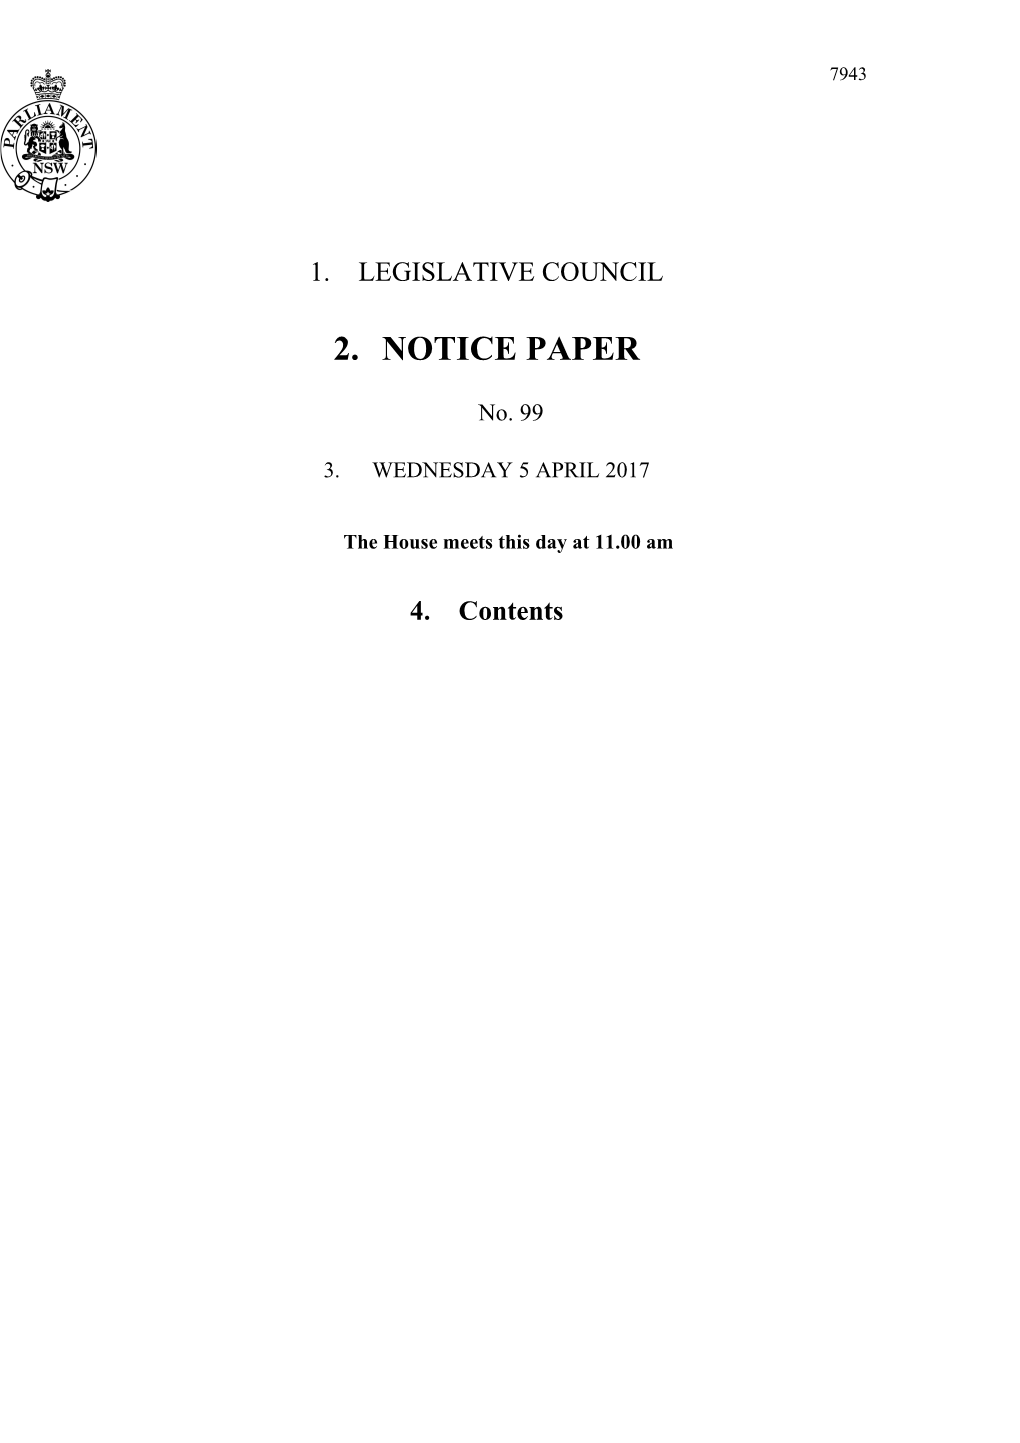 Legislative Council Notice Paper No. 99 Wednesday 5 April 2017